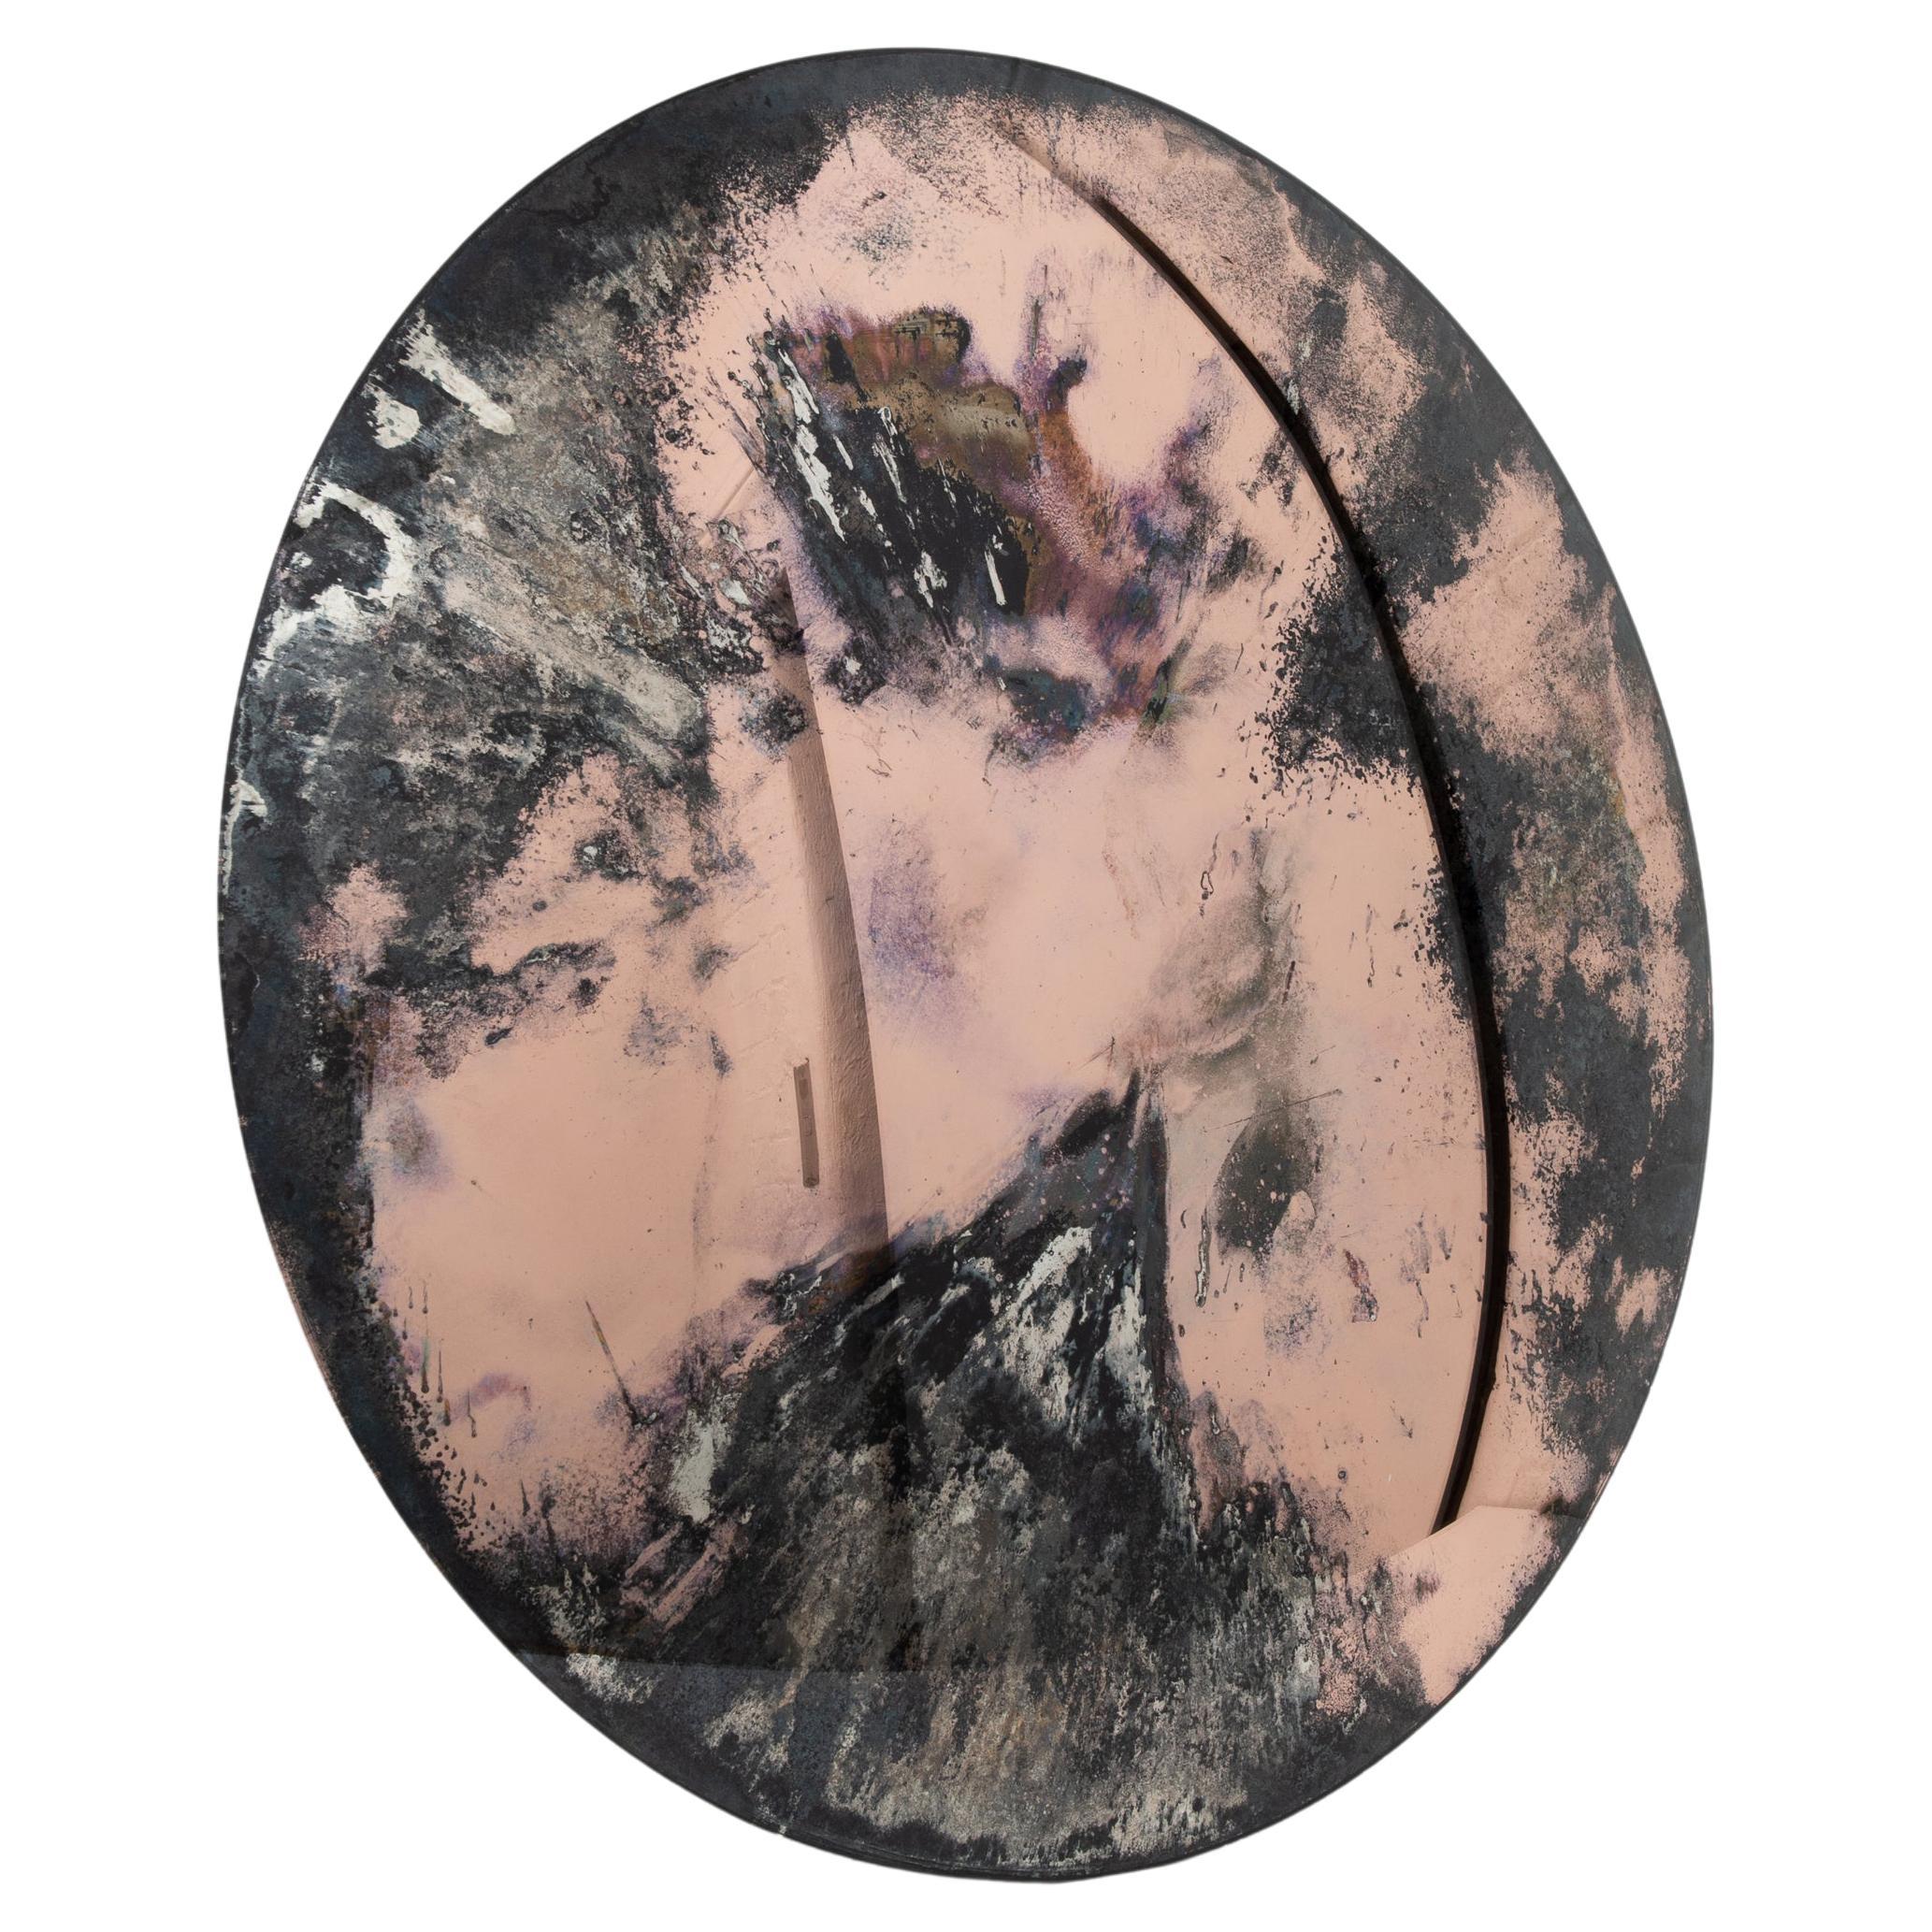 Grand miroir rond Orbis convexe en or rose antique sans cadre, en stock